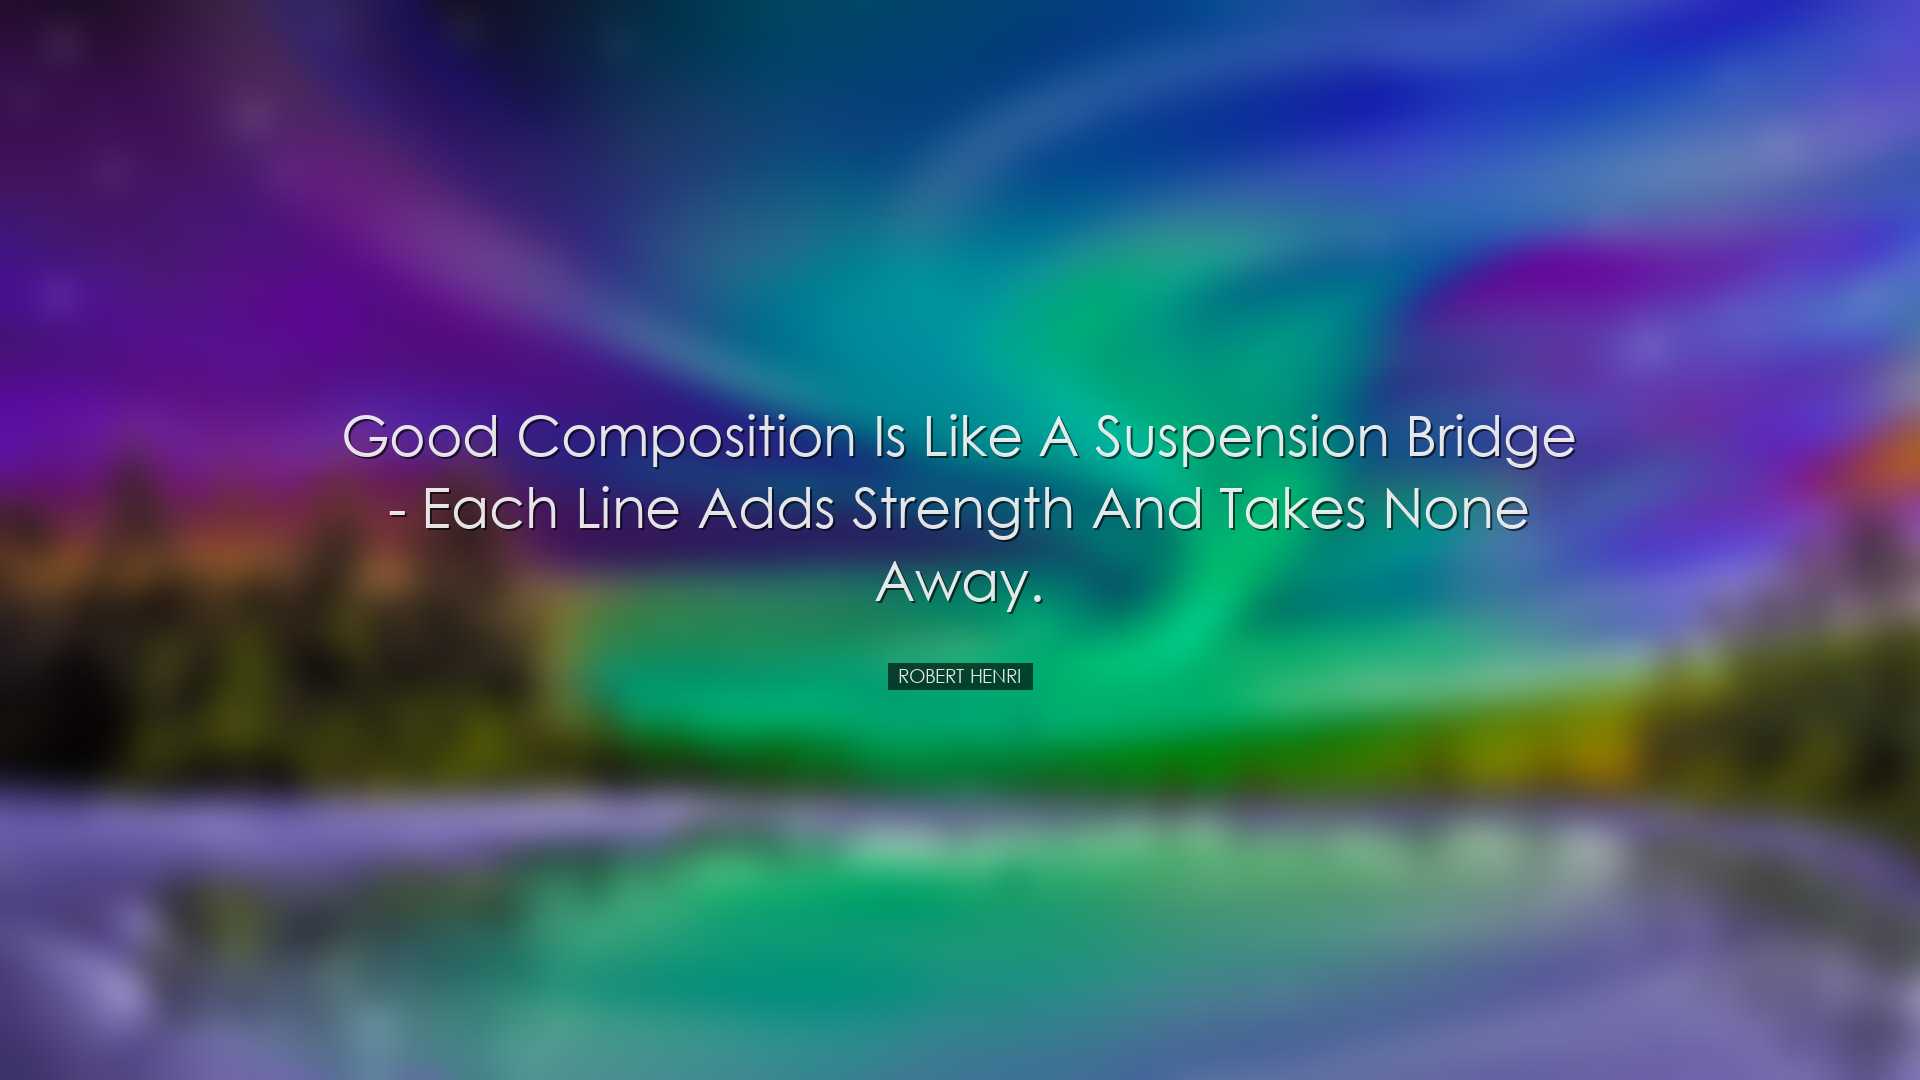 Good composition is like a suspension bridge - each line adds stre